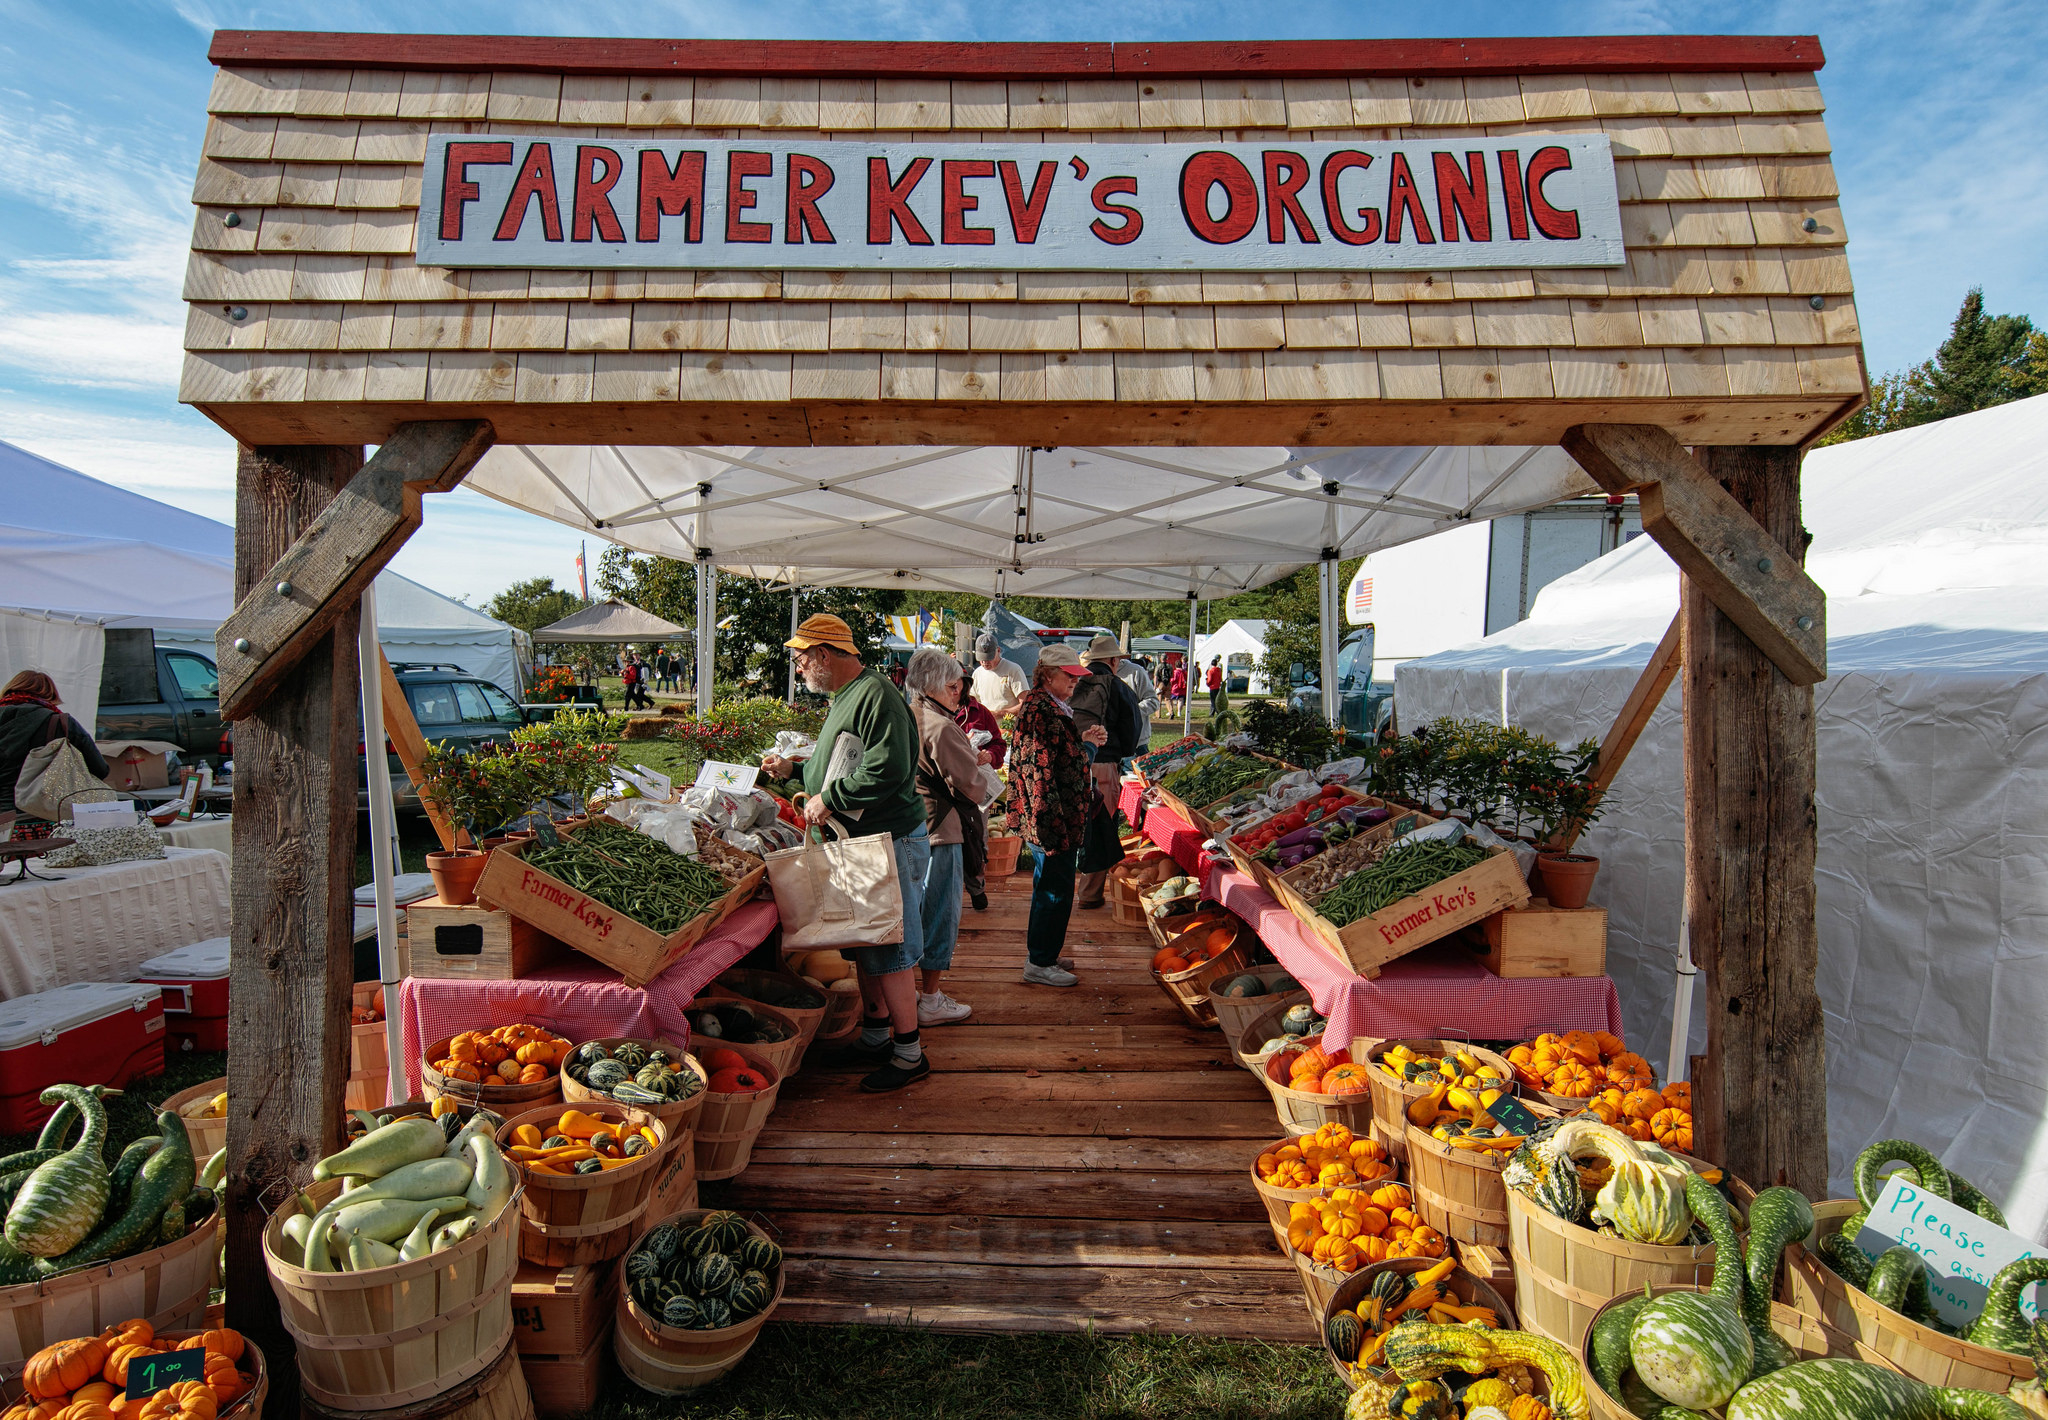 Farmer Kev's Organic farmstand in West Gardiner, Maine.